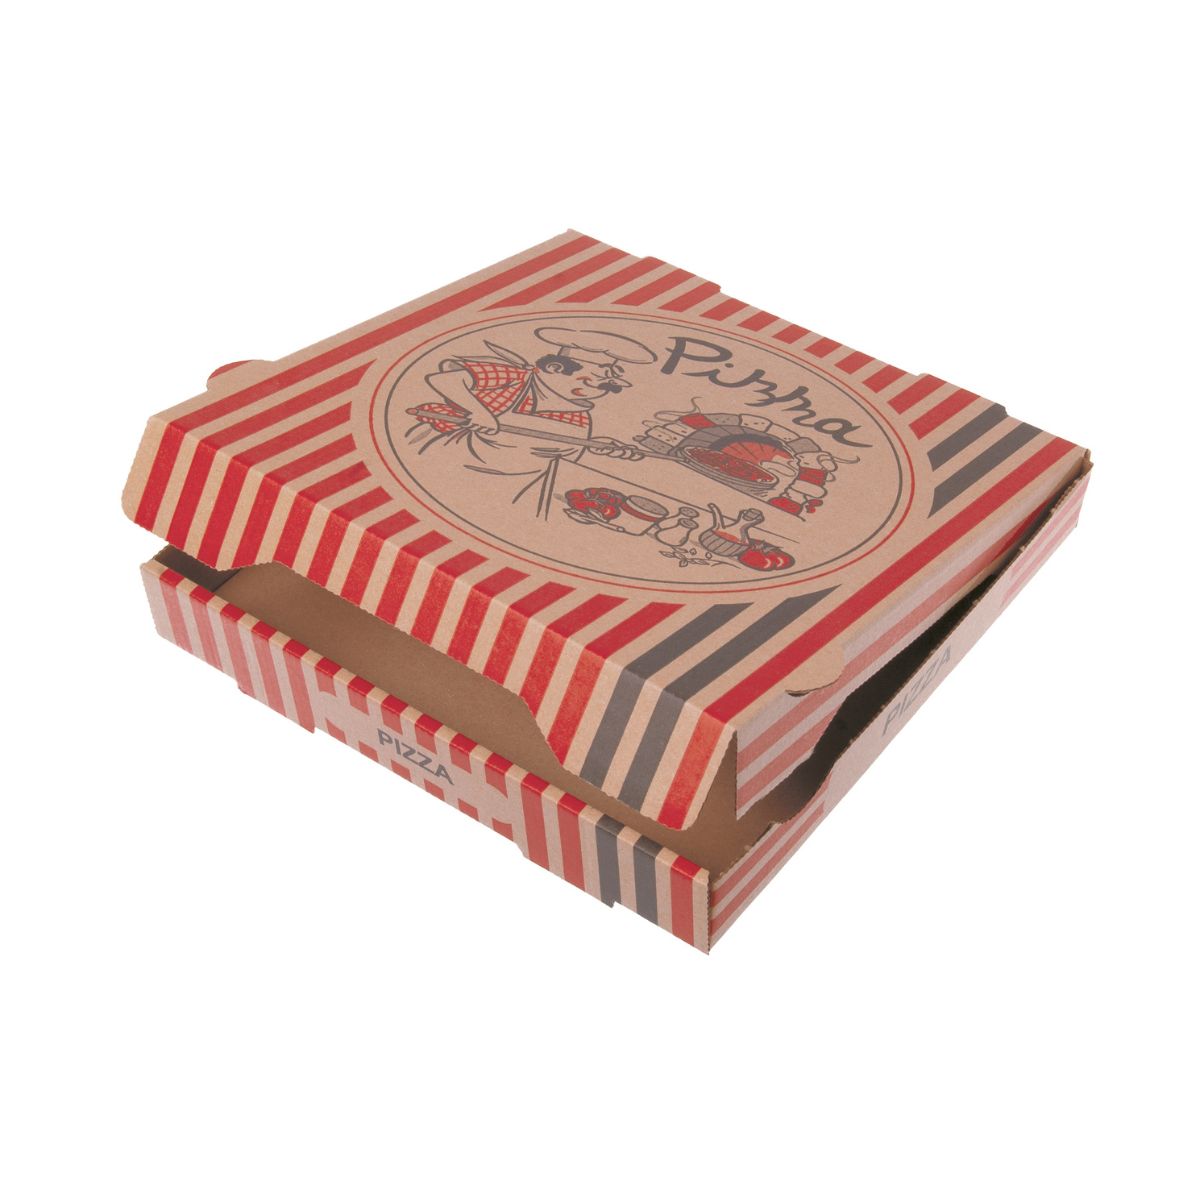 Pizzabox 20x20x4cm | Kraft rot-braun